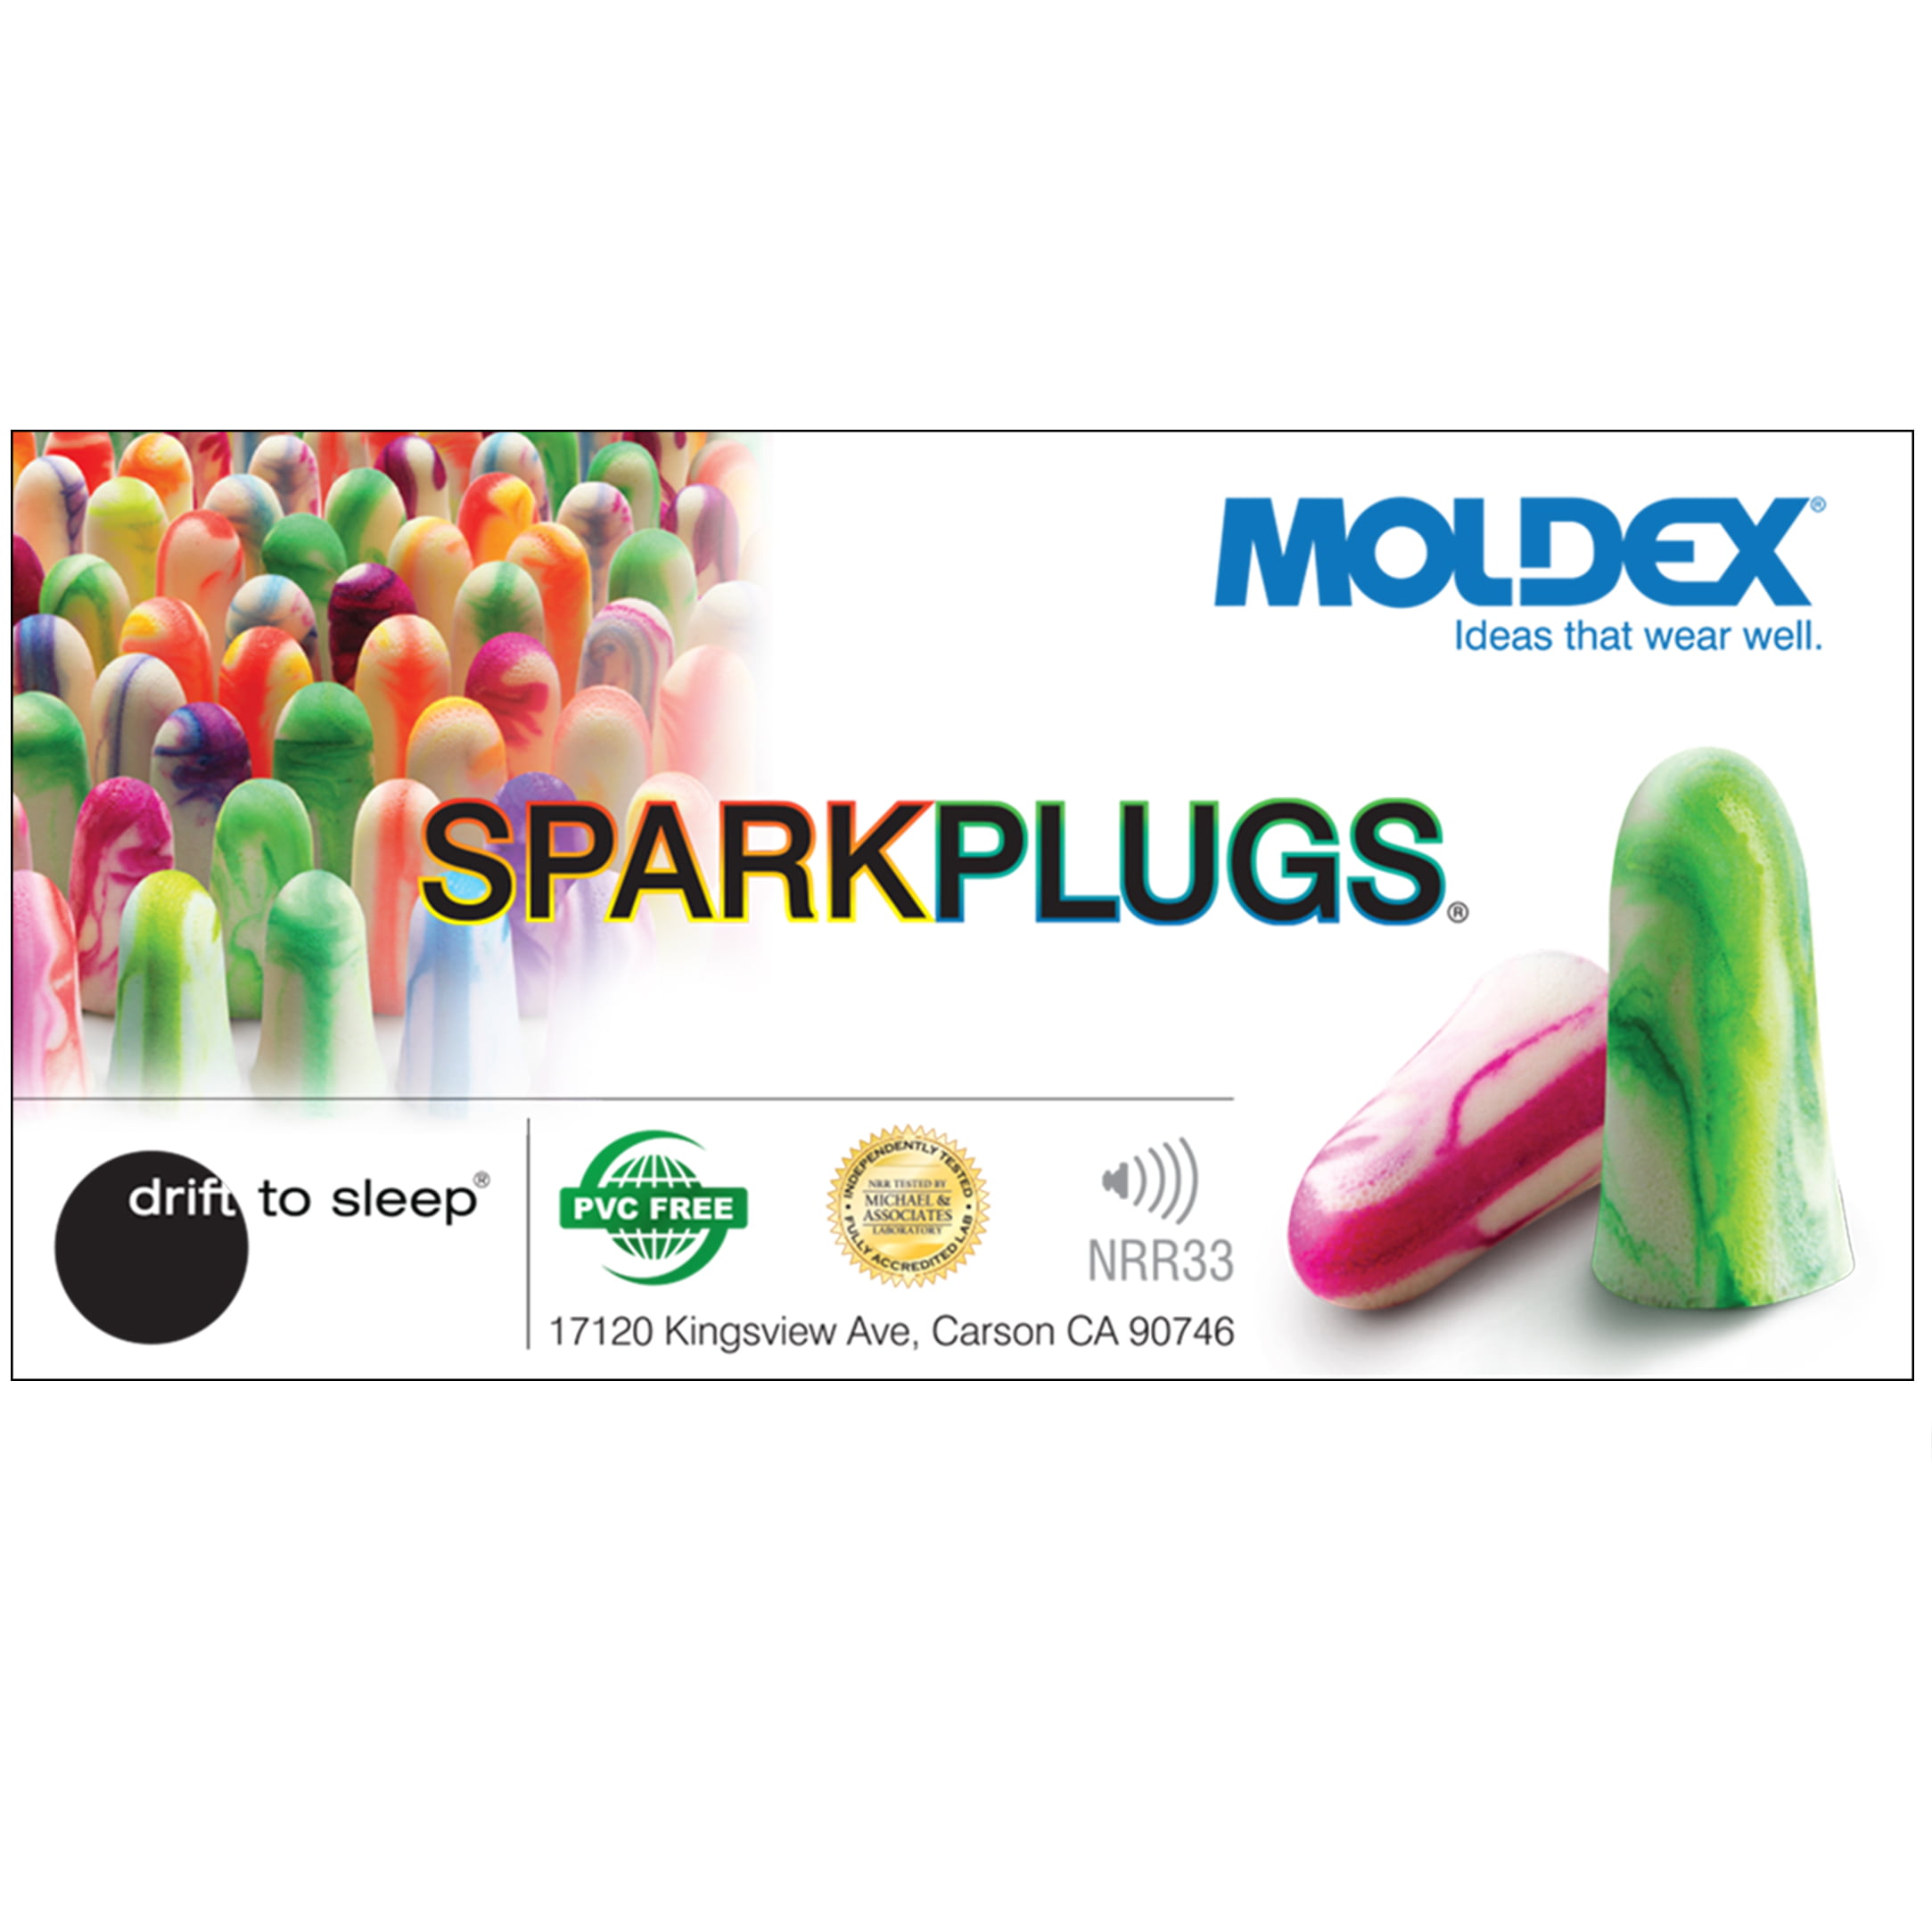 33dB Highest NRR Made MOLDEX Sparkplugs Soft Foam Ear Plugs 50 Pairs Earplugs